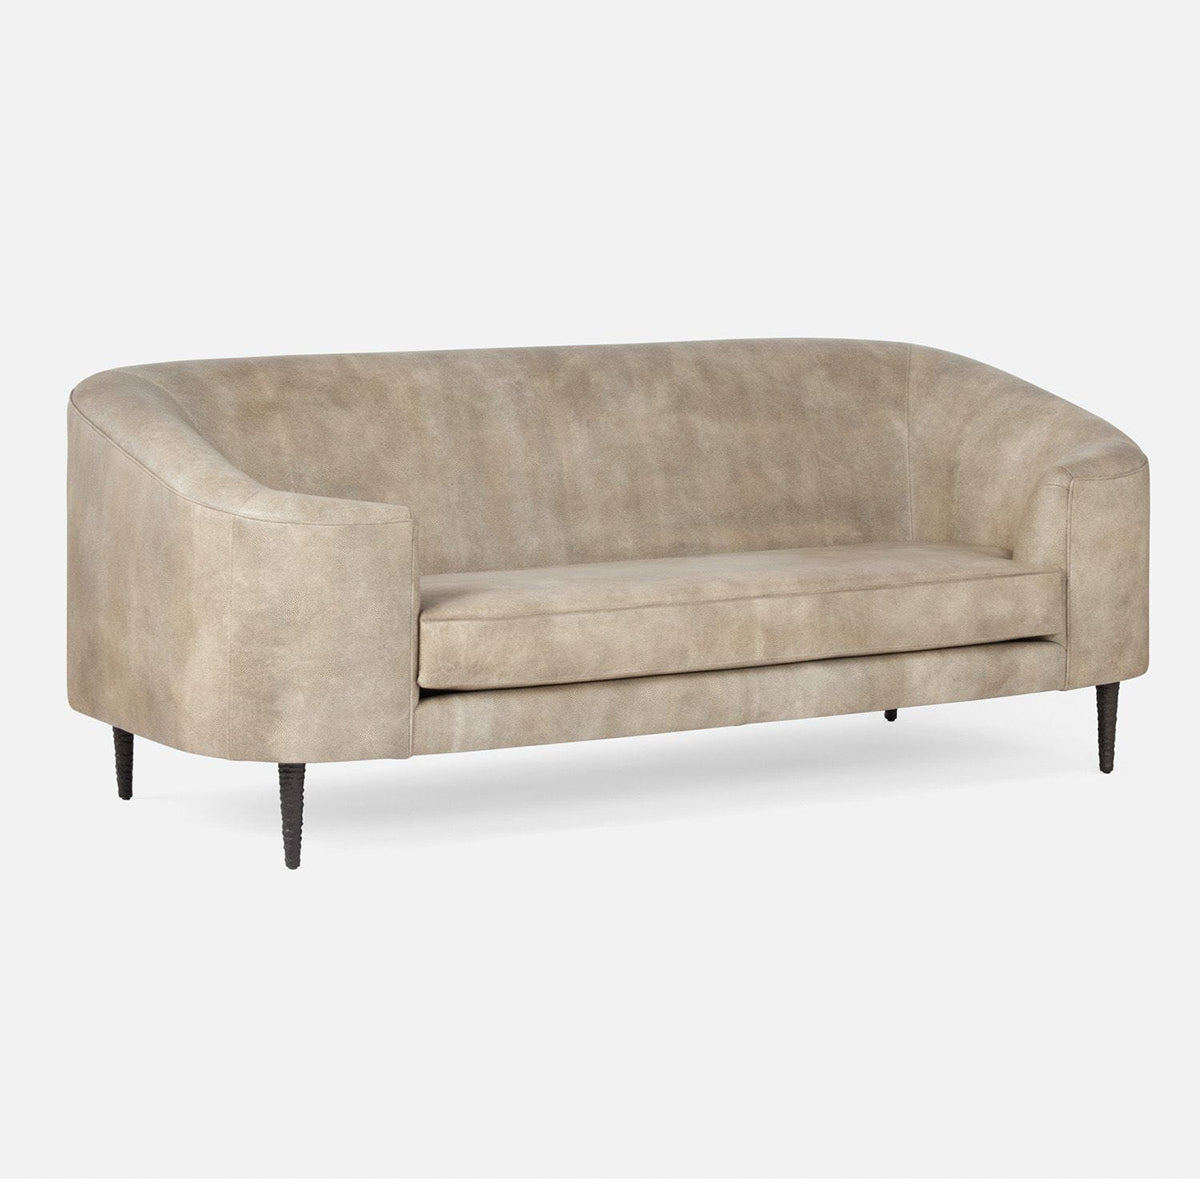 Made Goods Basset Contemporary Cabriole-Style Sofa, Liard Velvet